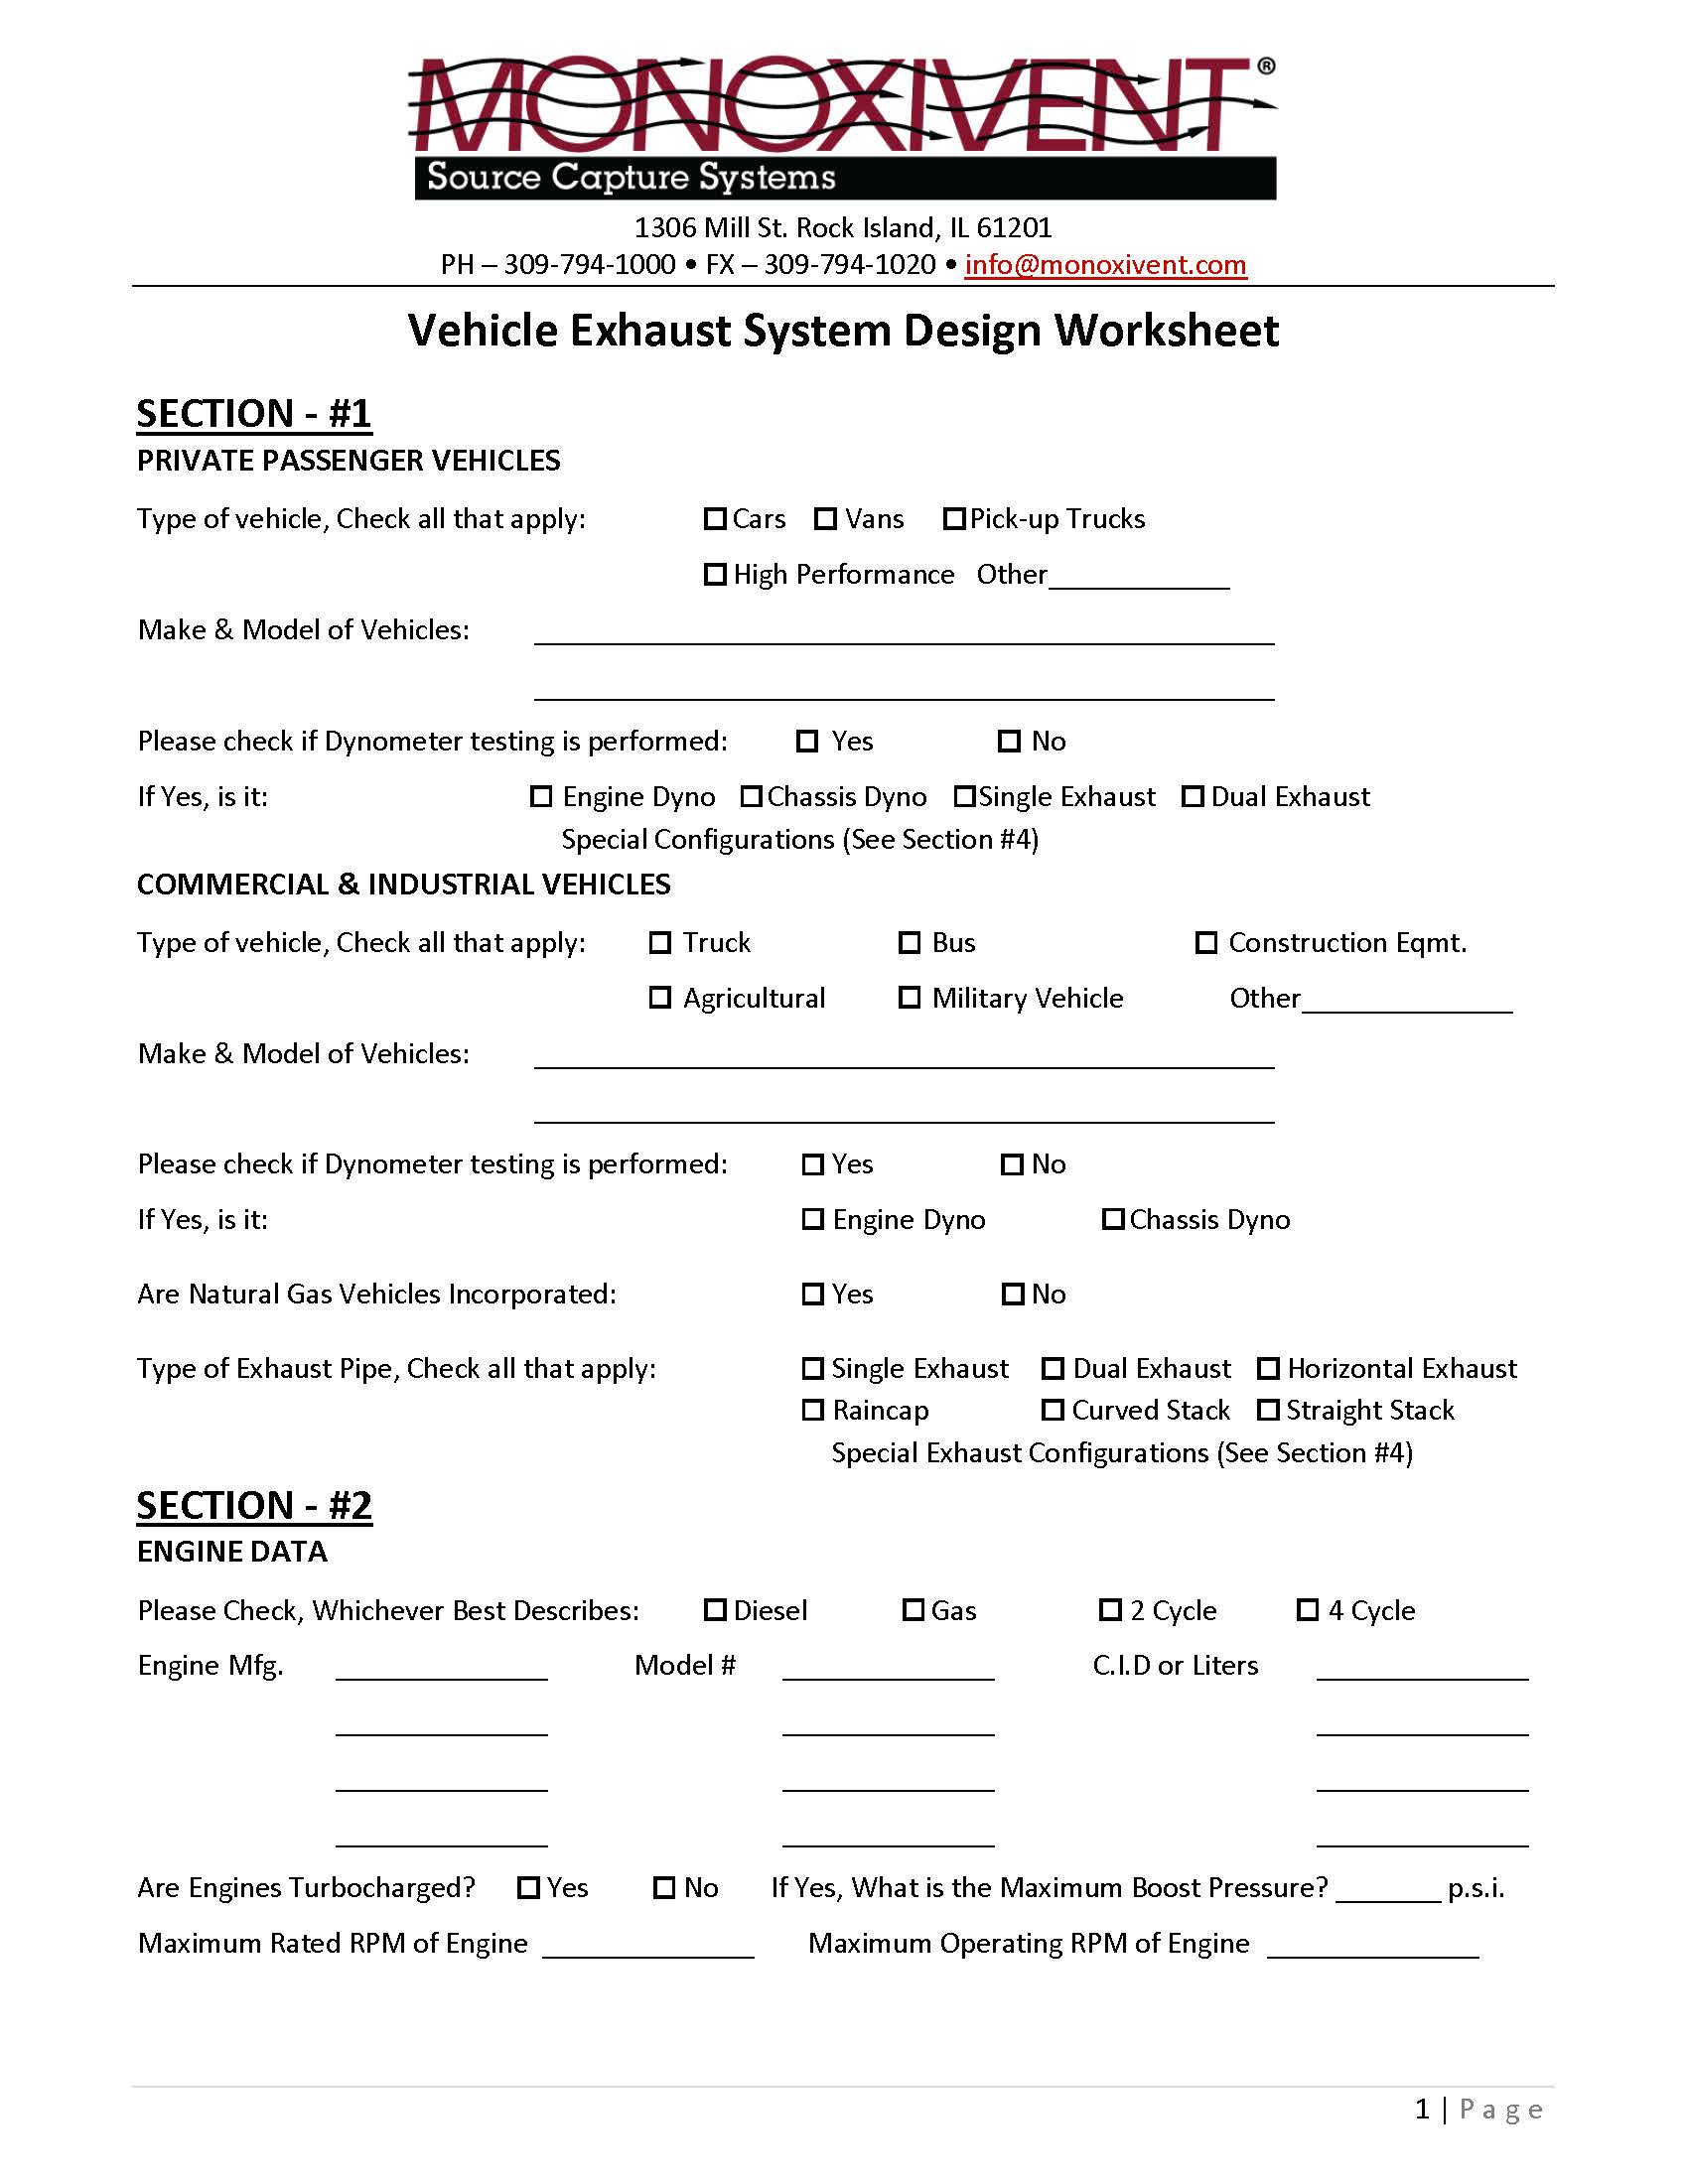 Vehicle Exhaust System Design Worksheet